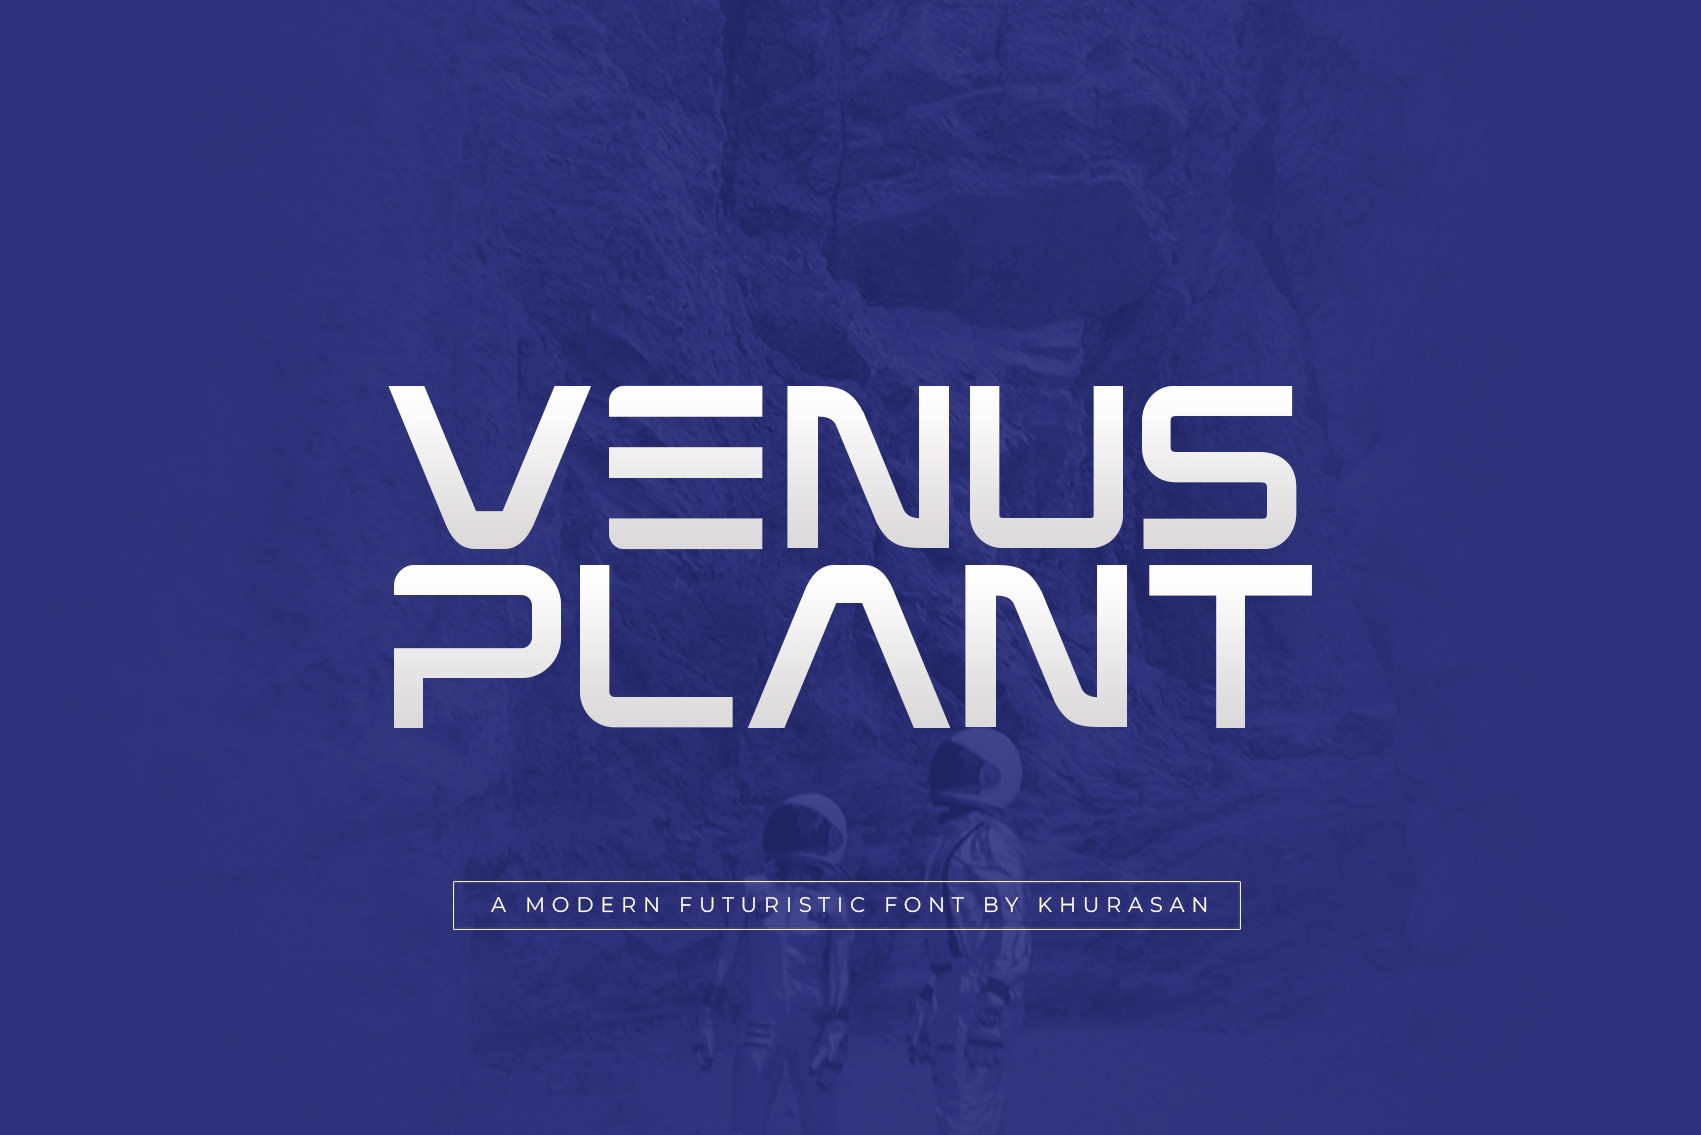 Police Venus Plant